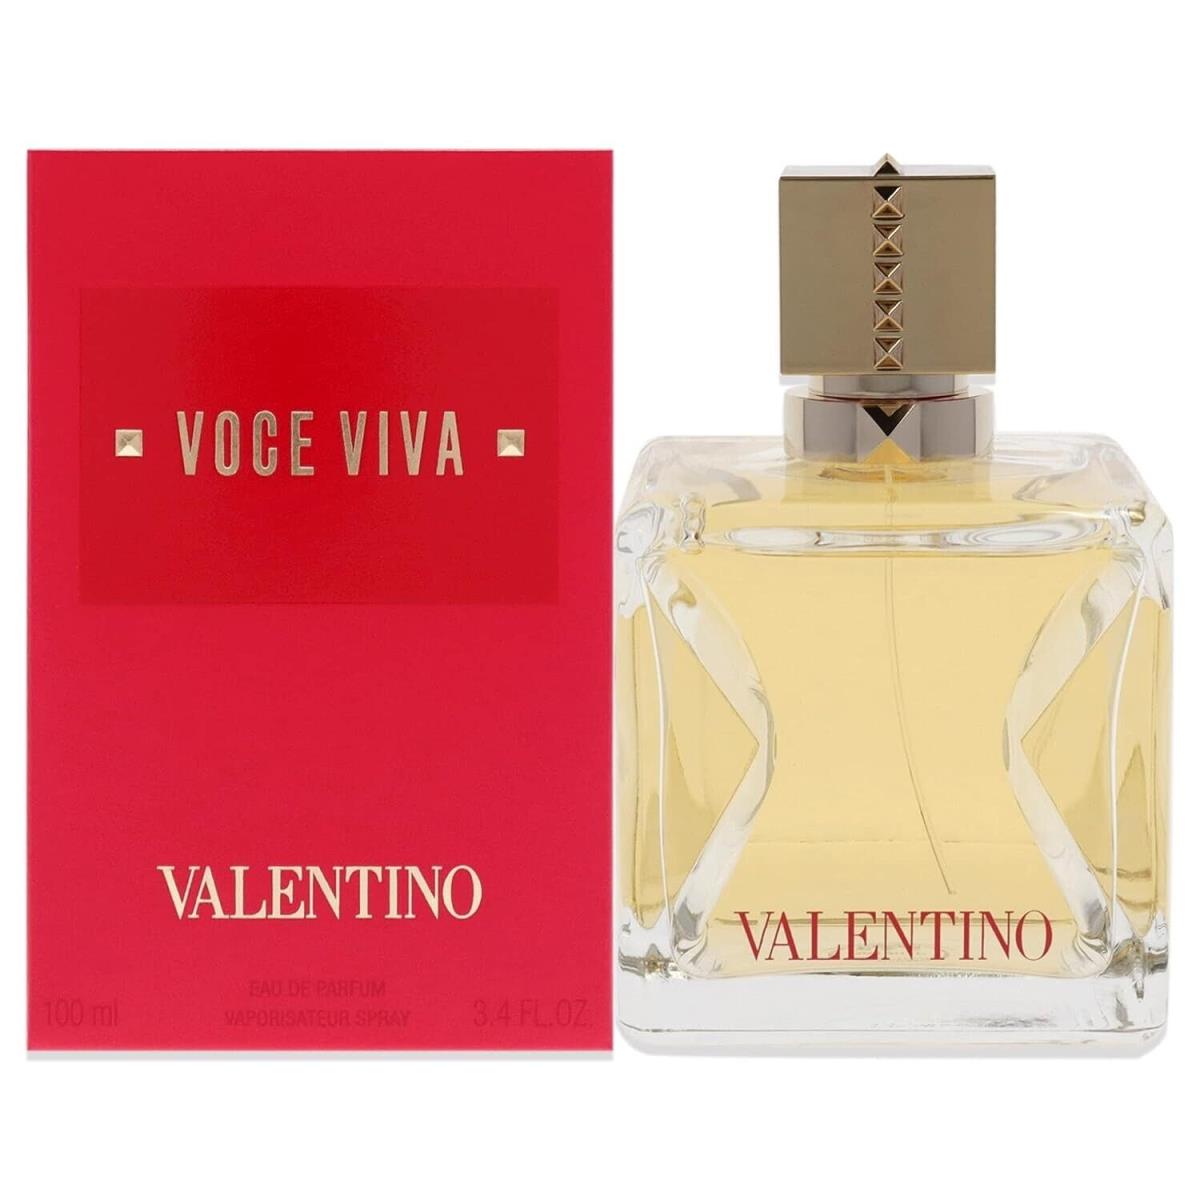 Valentino Voce Viva Eau de Parfum For Women 3.4 fl oz